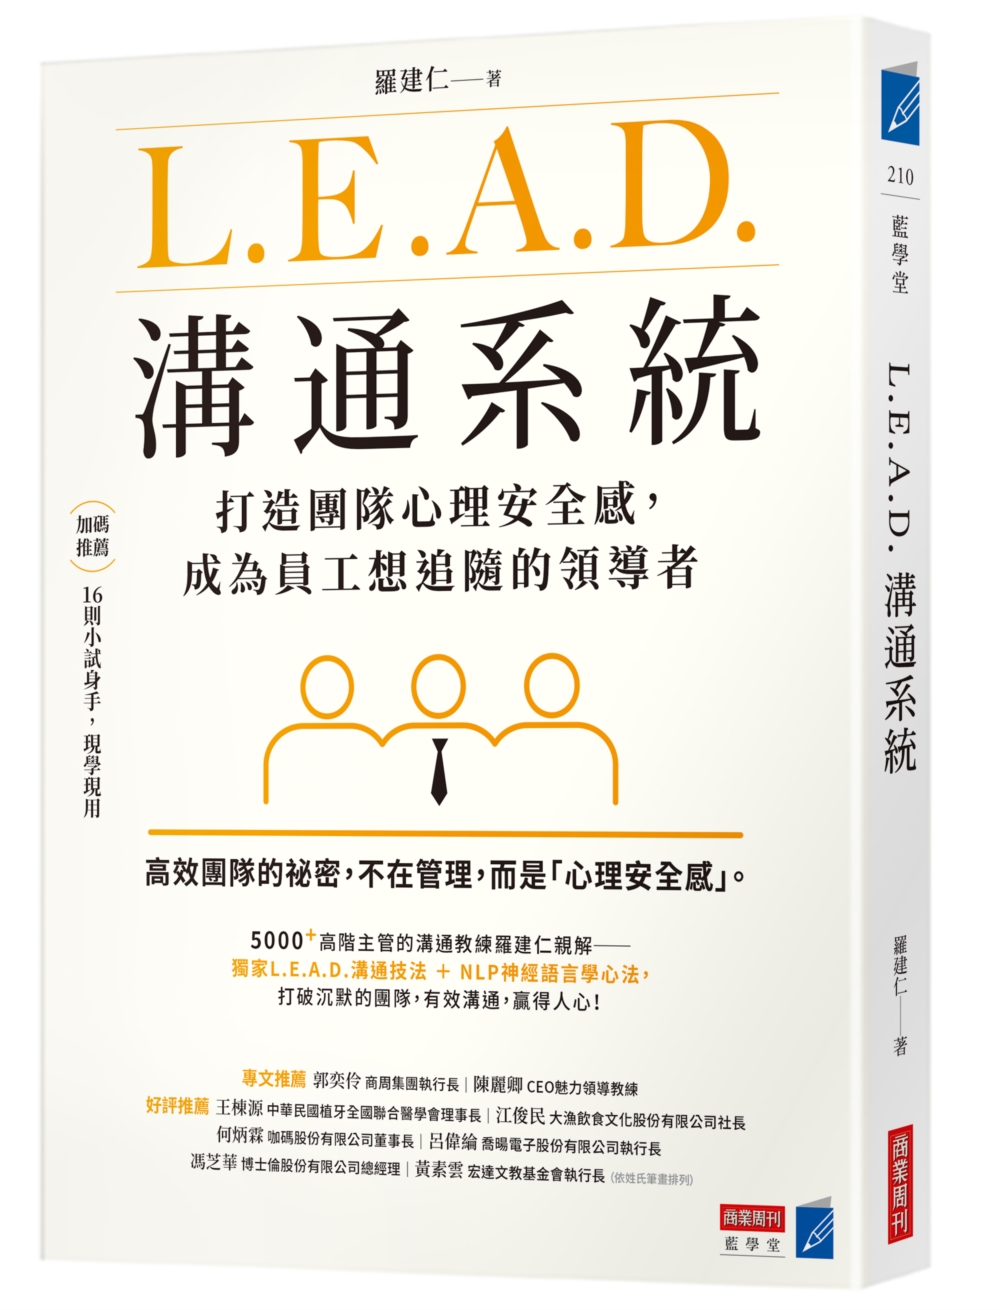 L.E.A.D.溝通系統: 打造團隊心理安全感, 成為員工想追隨的領導者